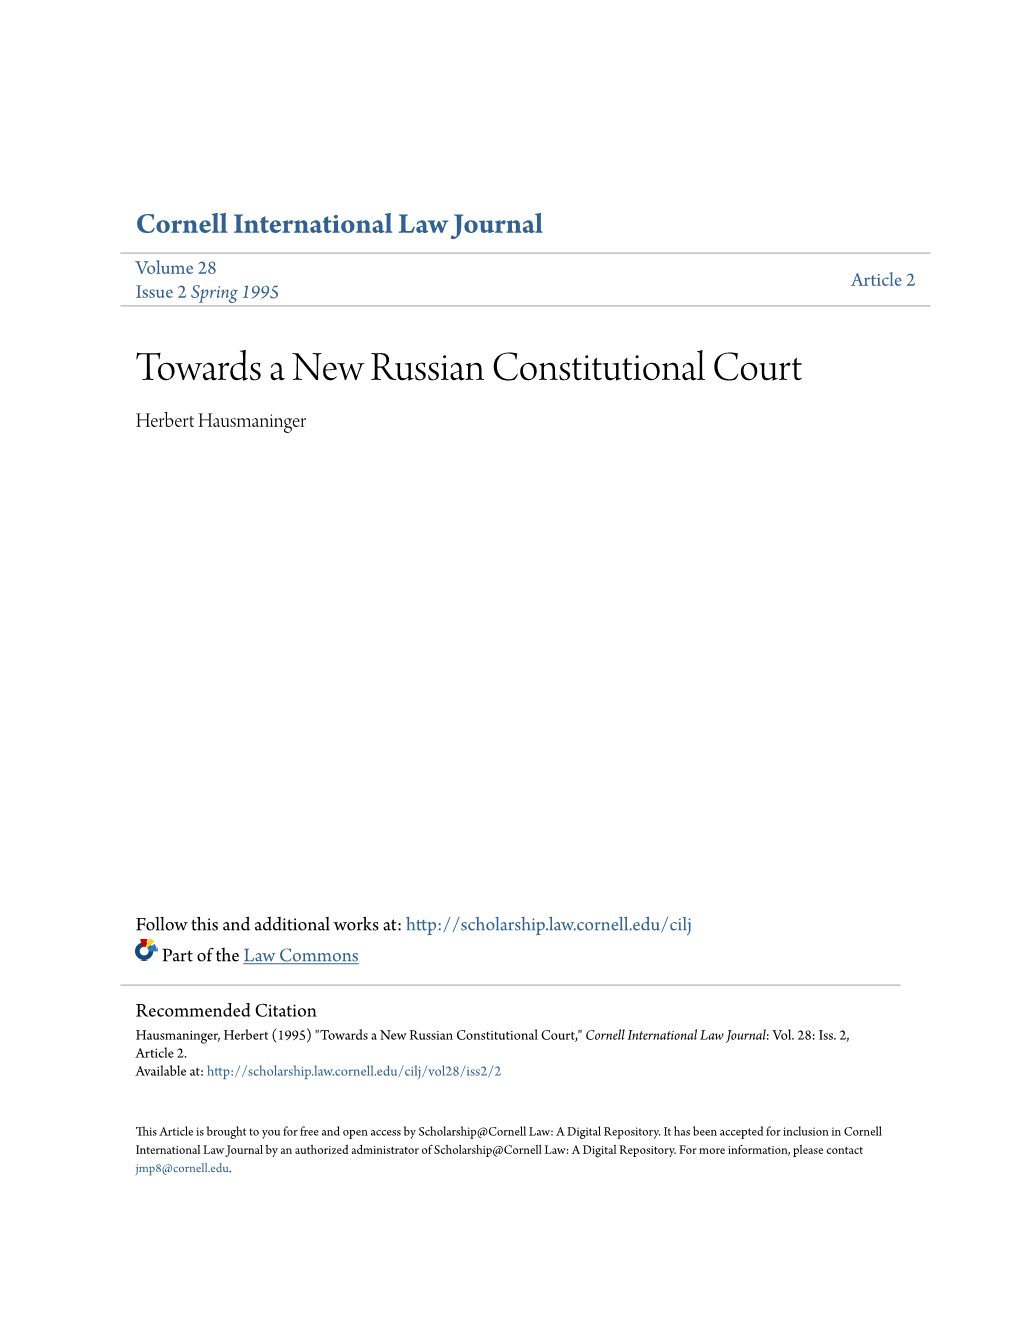 Towards a New Russian Constitutional Court Herbert Hausmaninger